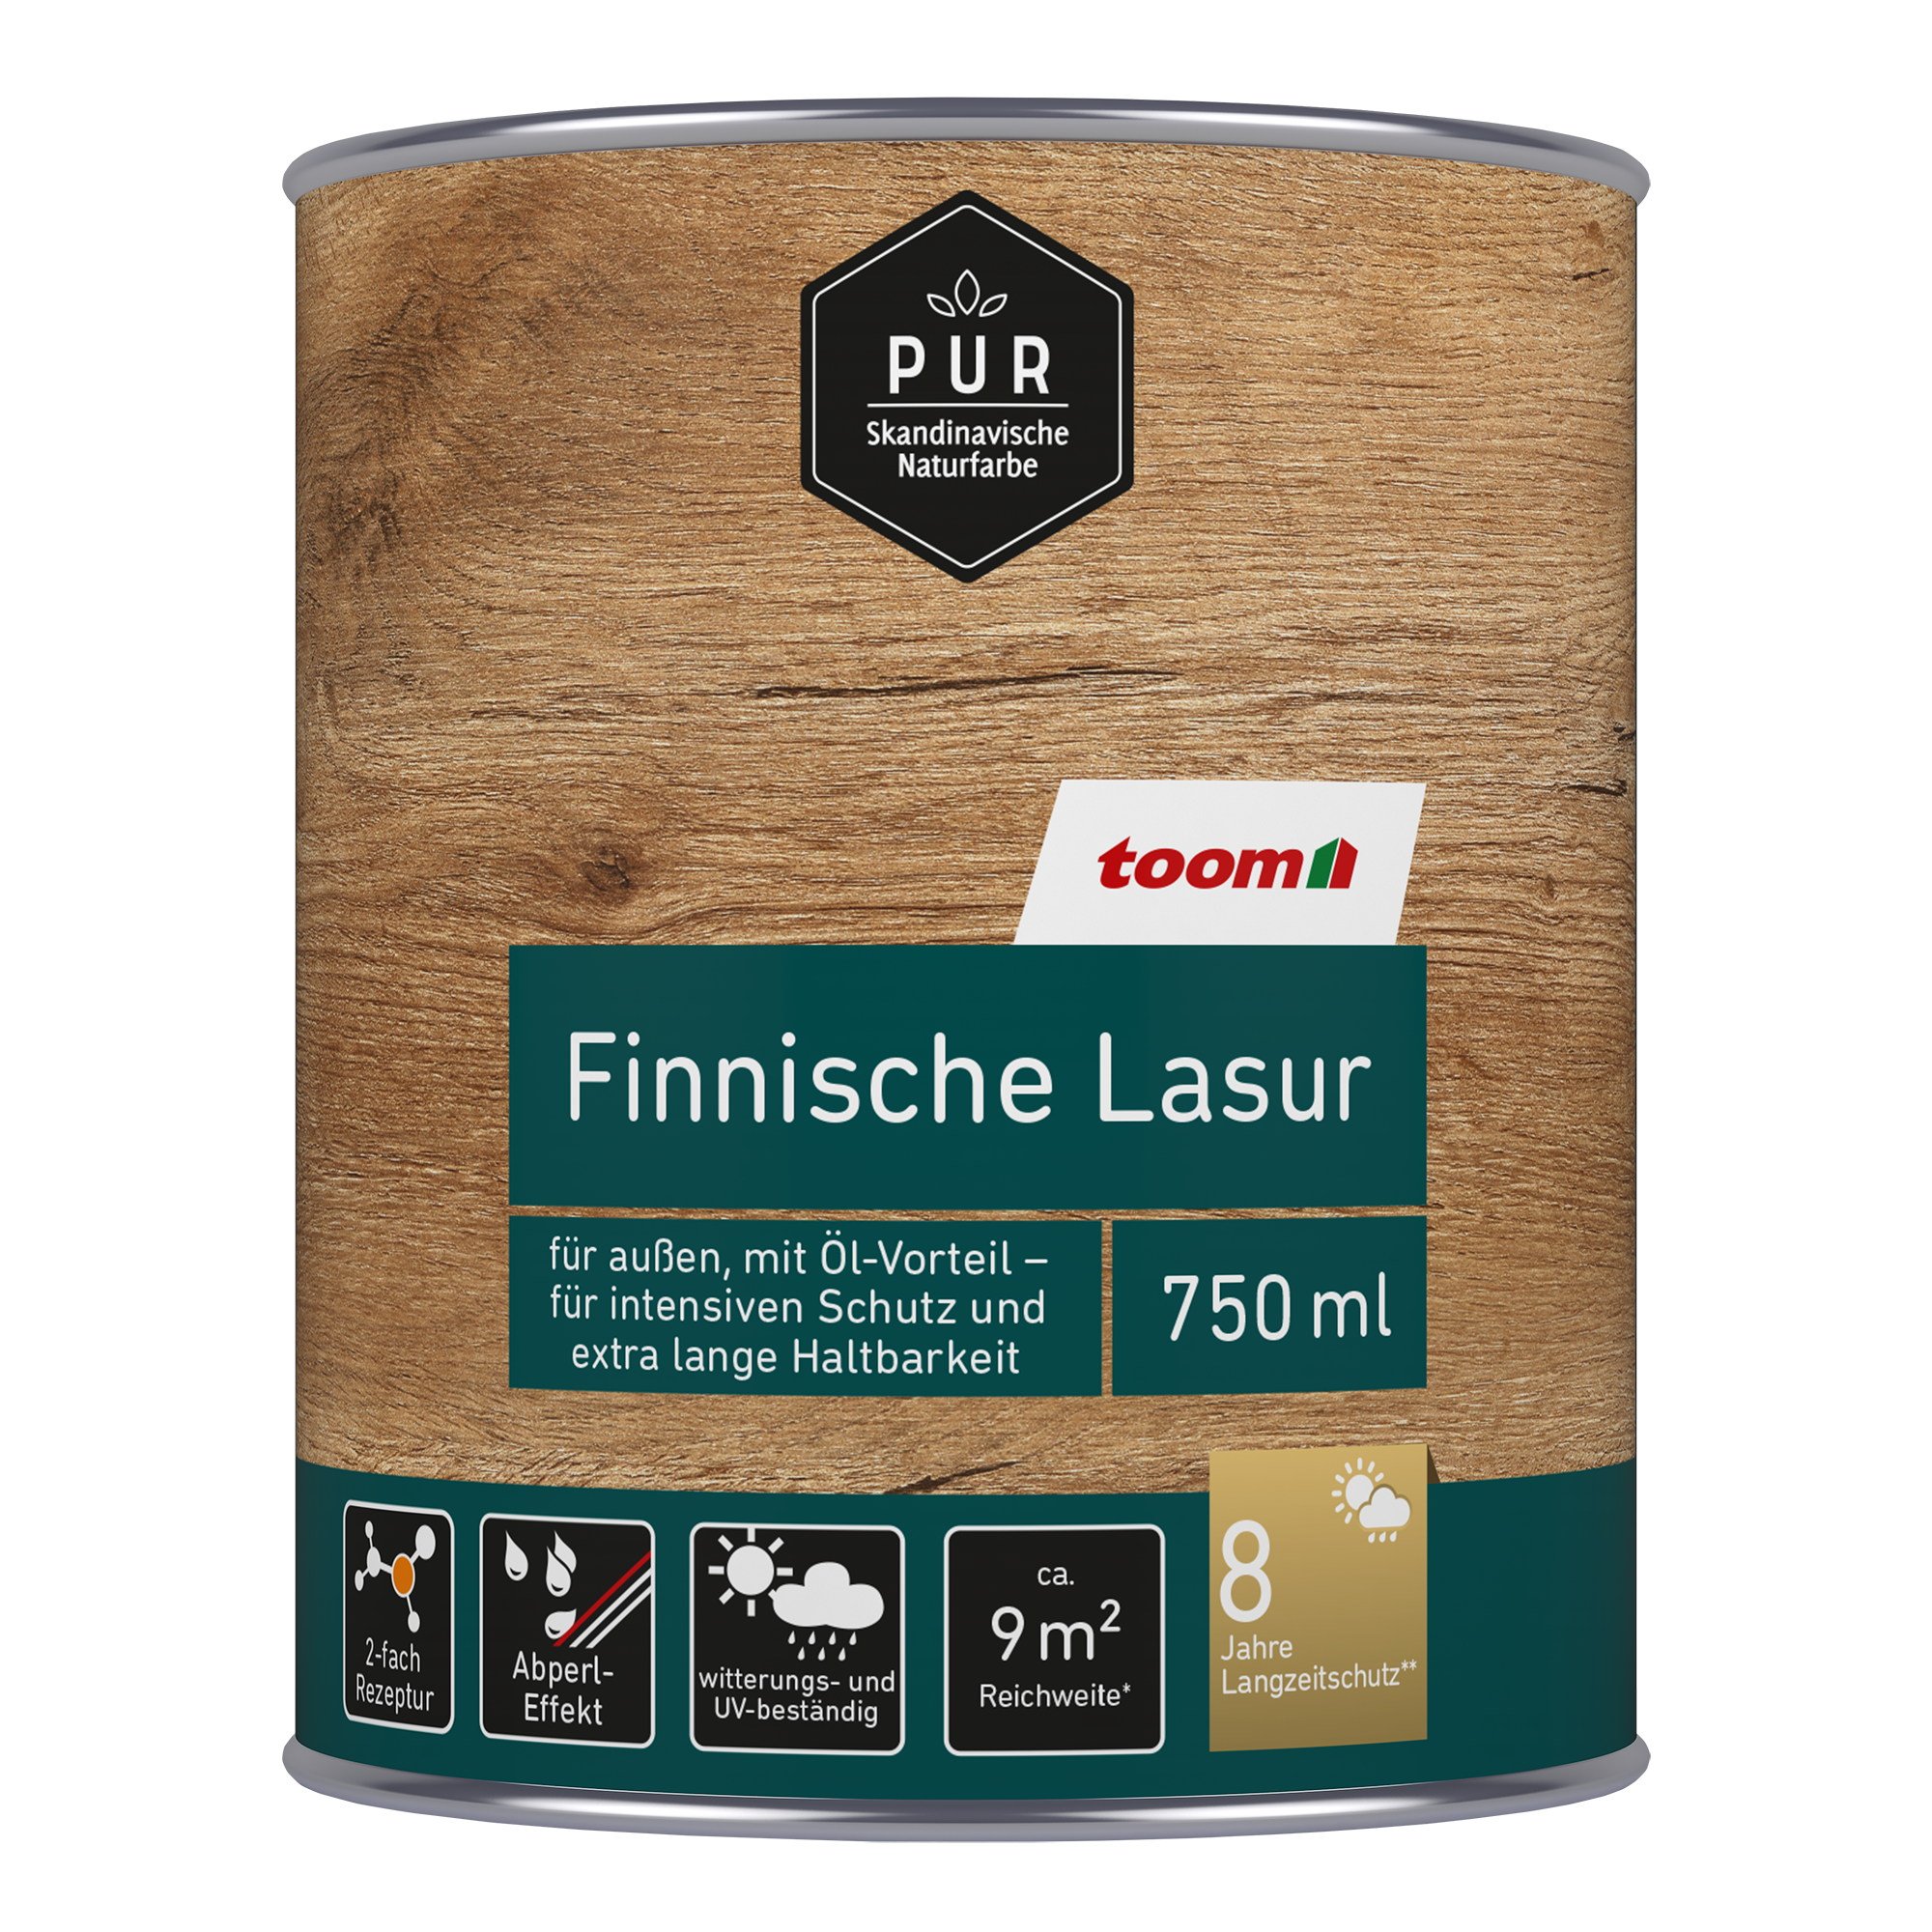 Finnische Lasur palisanderfarben 750 ml + product picture